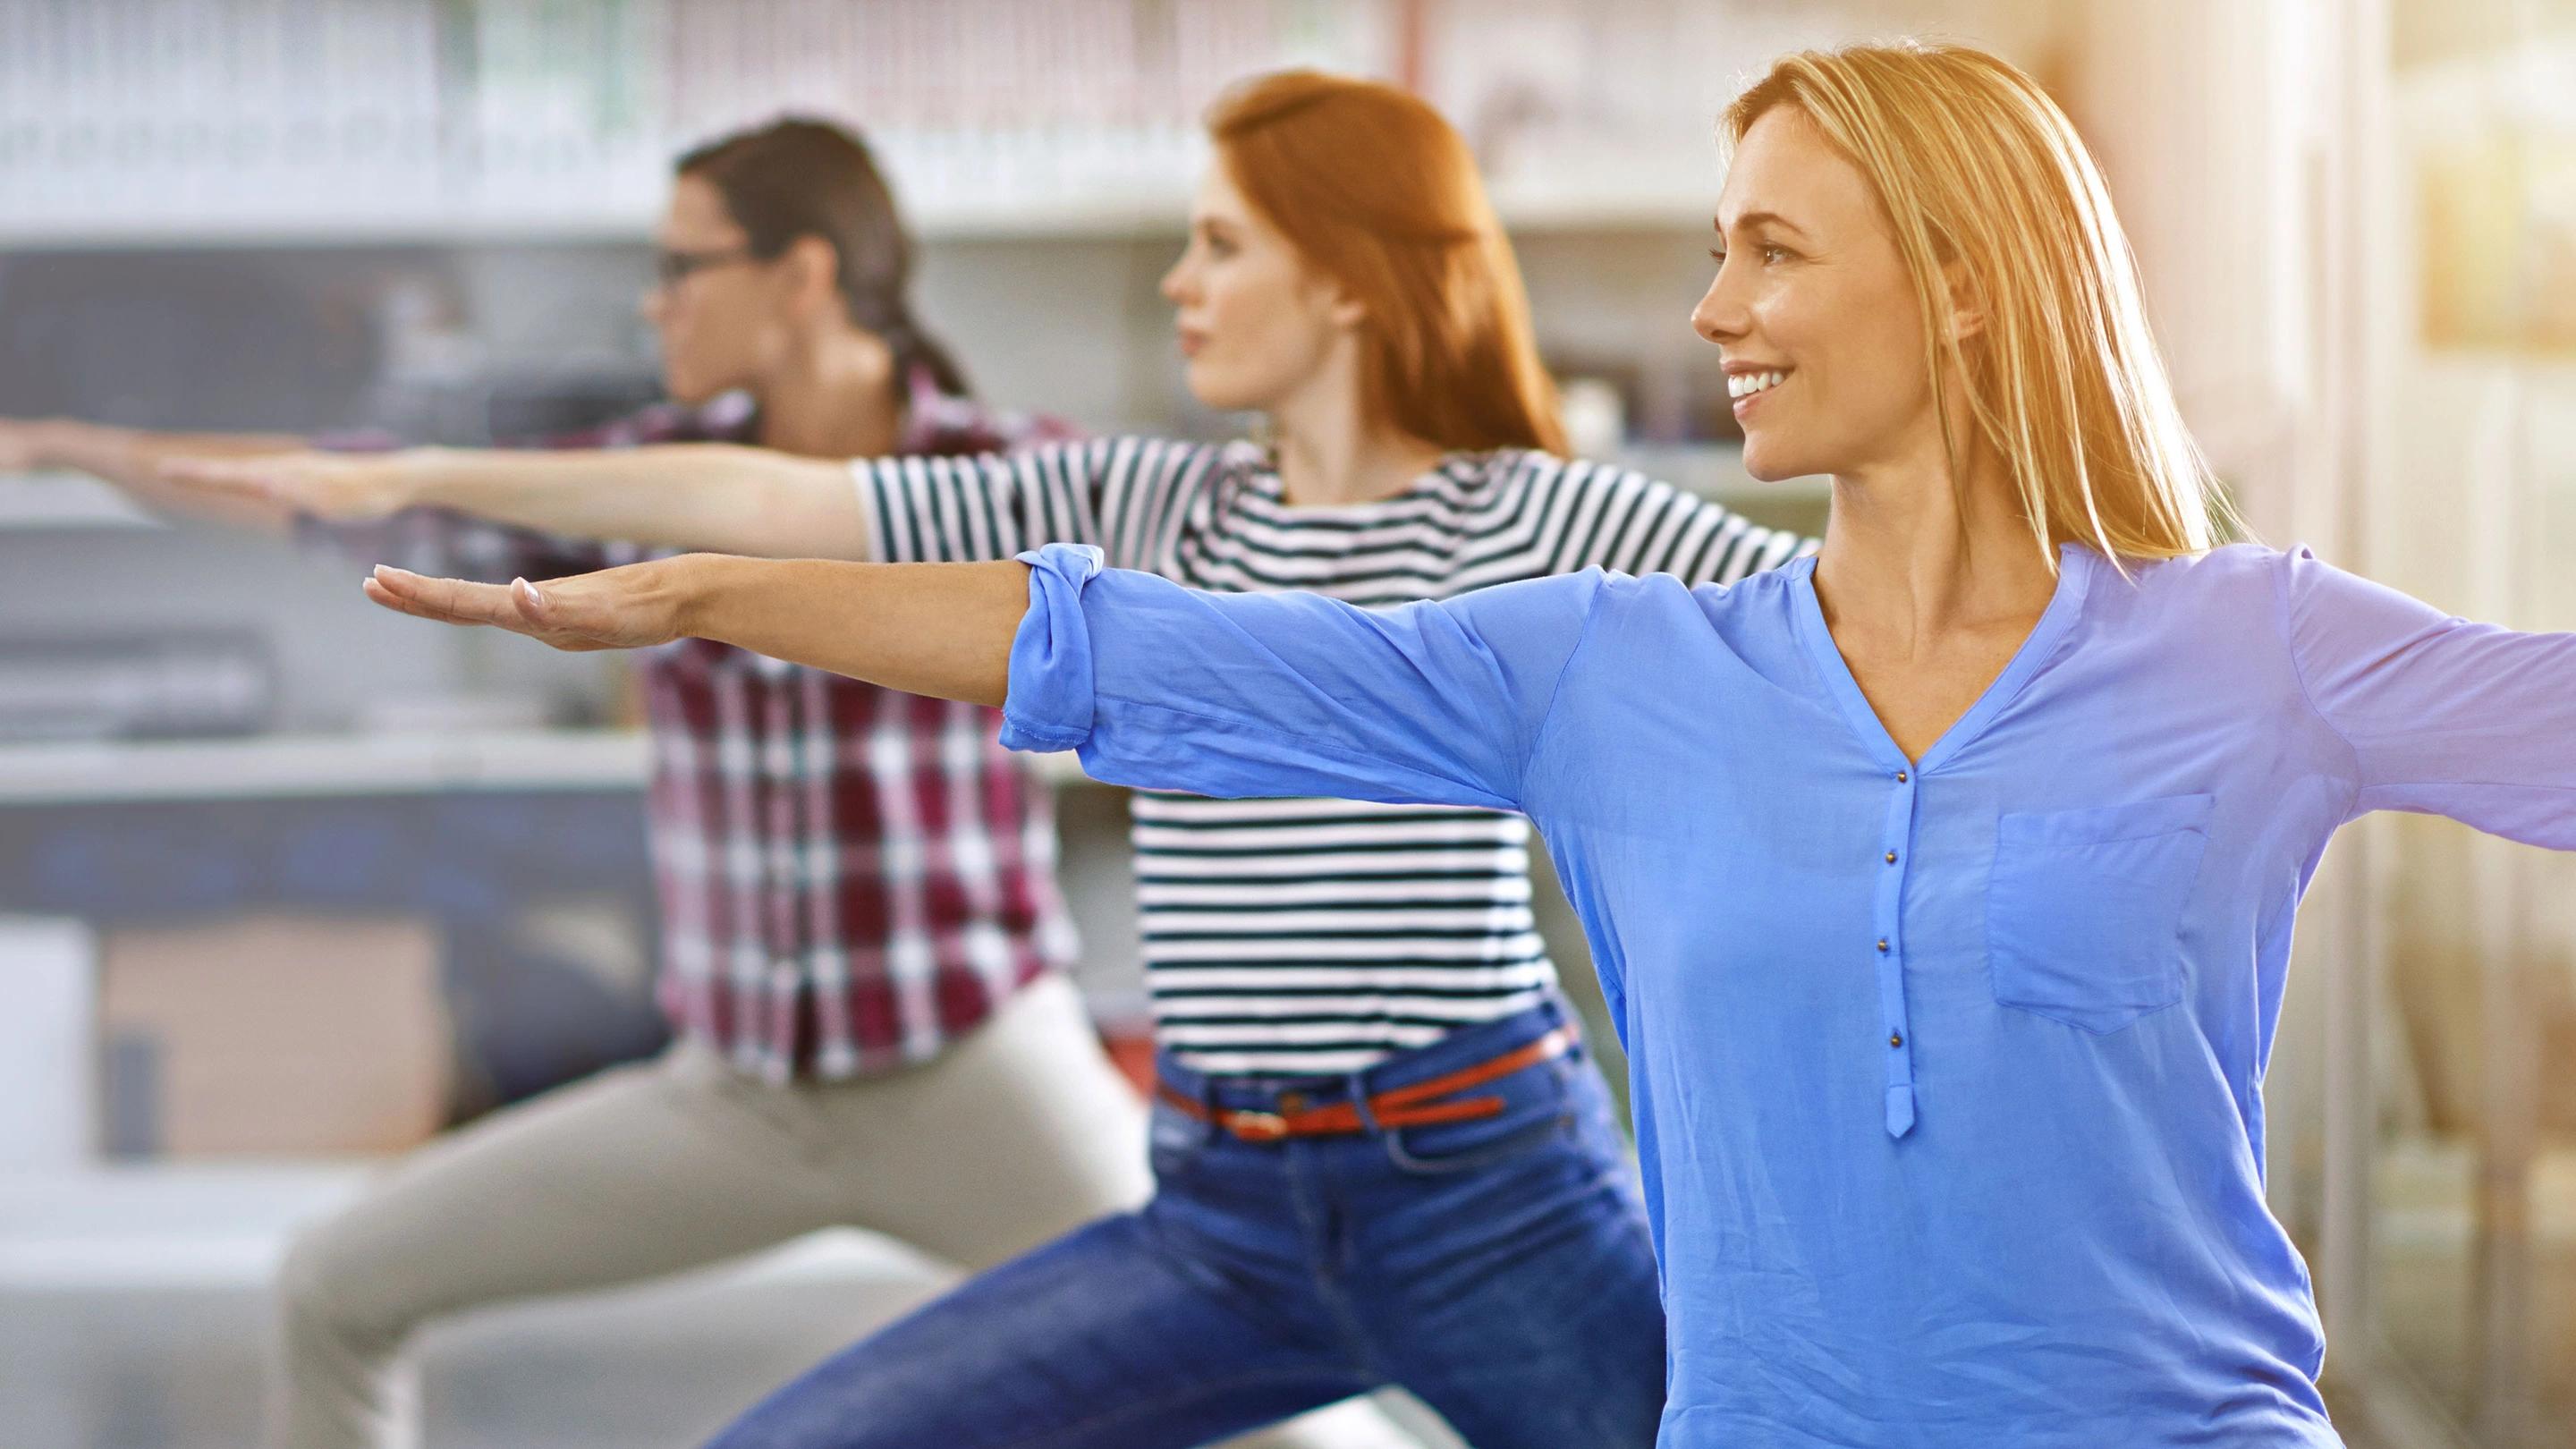 Bild: Frauen in Bürokleidung machen Yoga